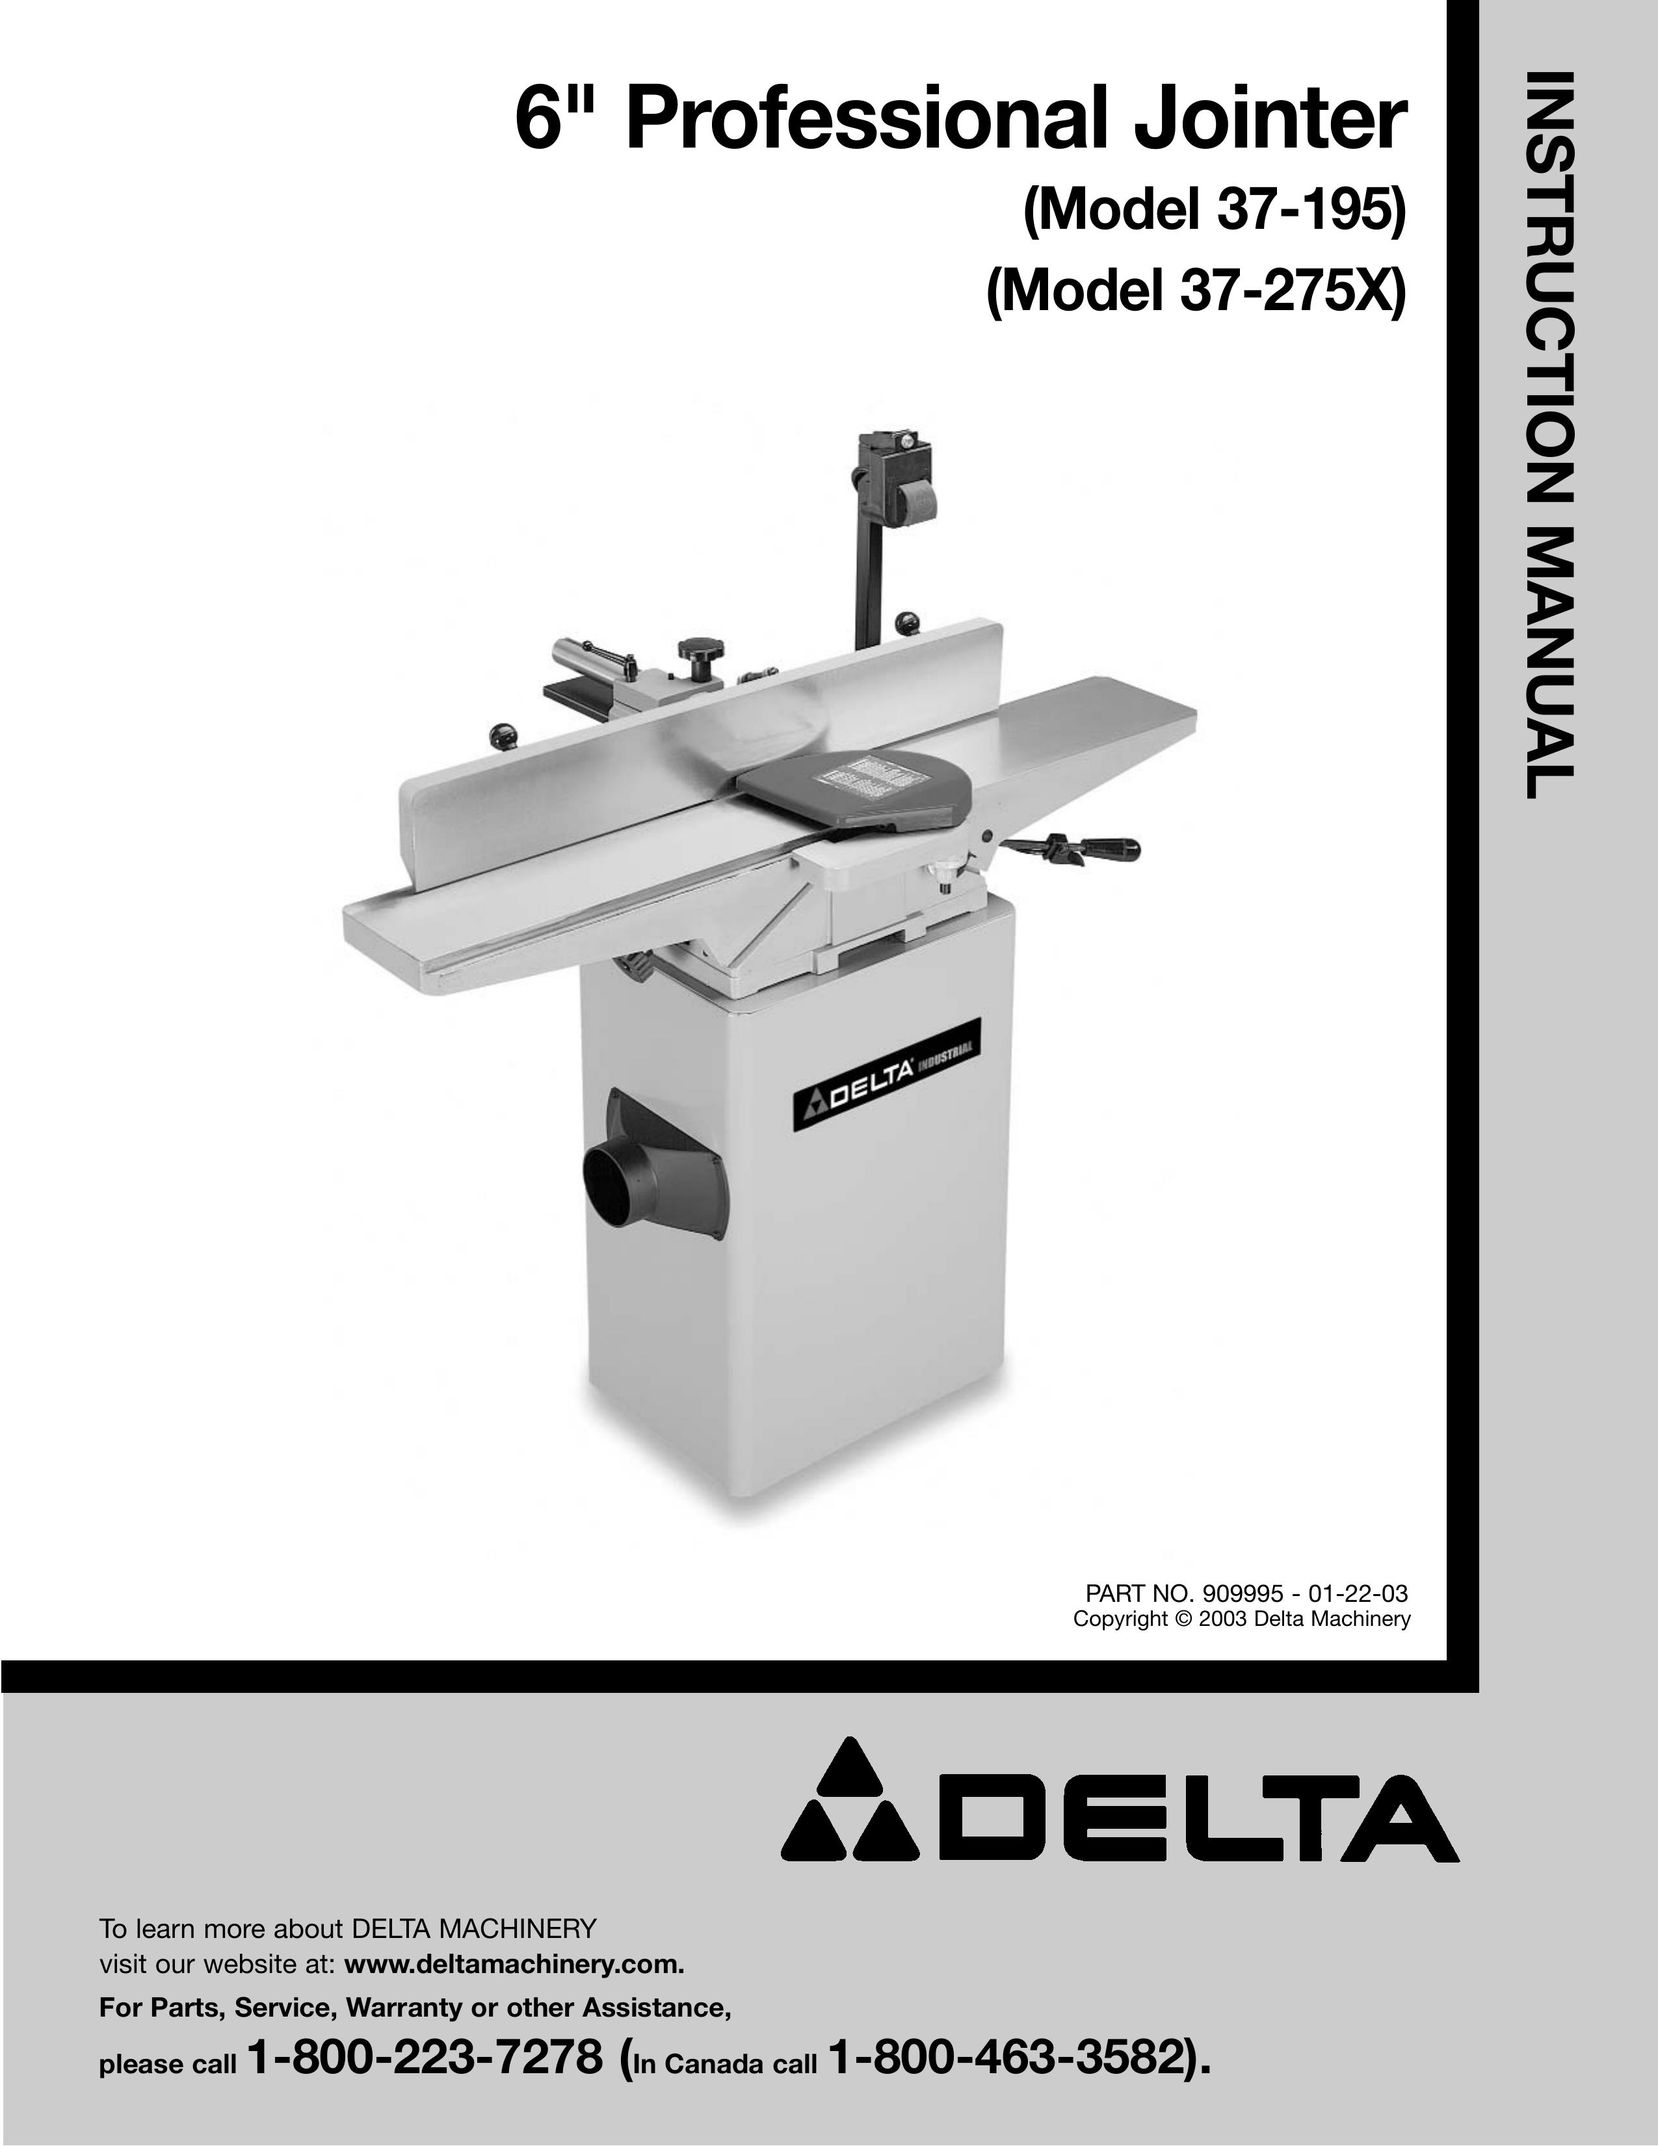 Delta 37-195 Biscuit Joiner User Manual